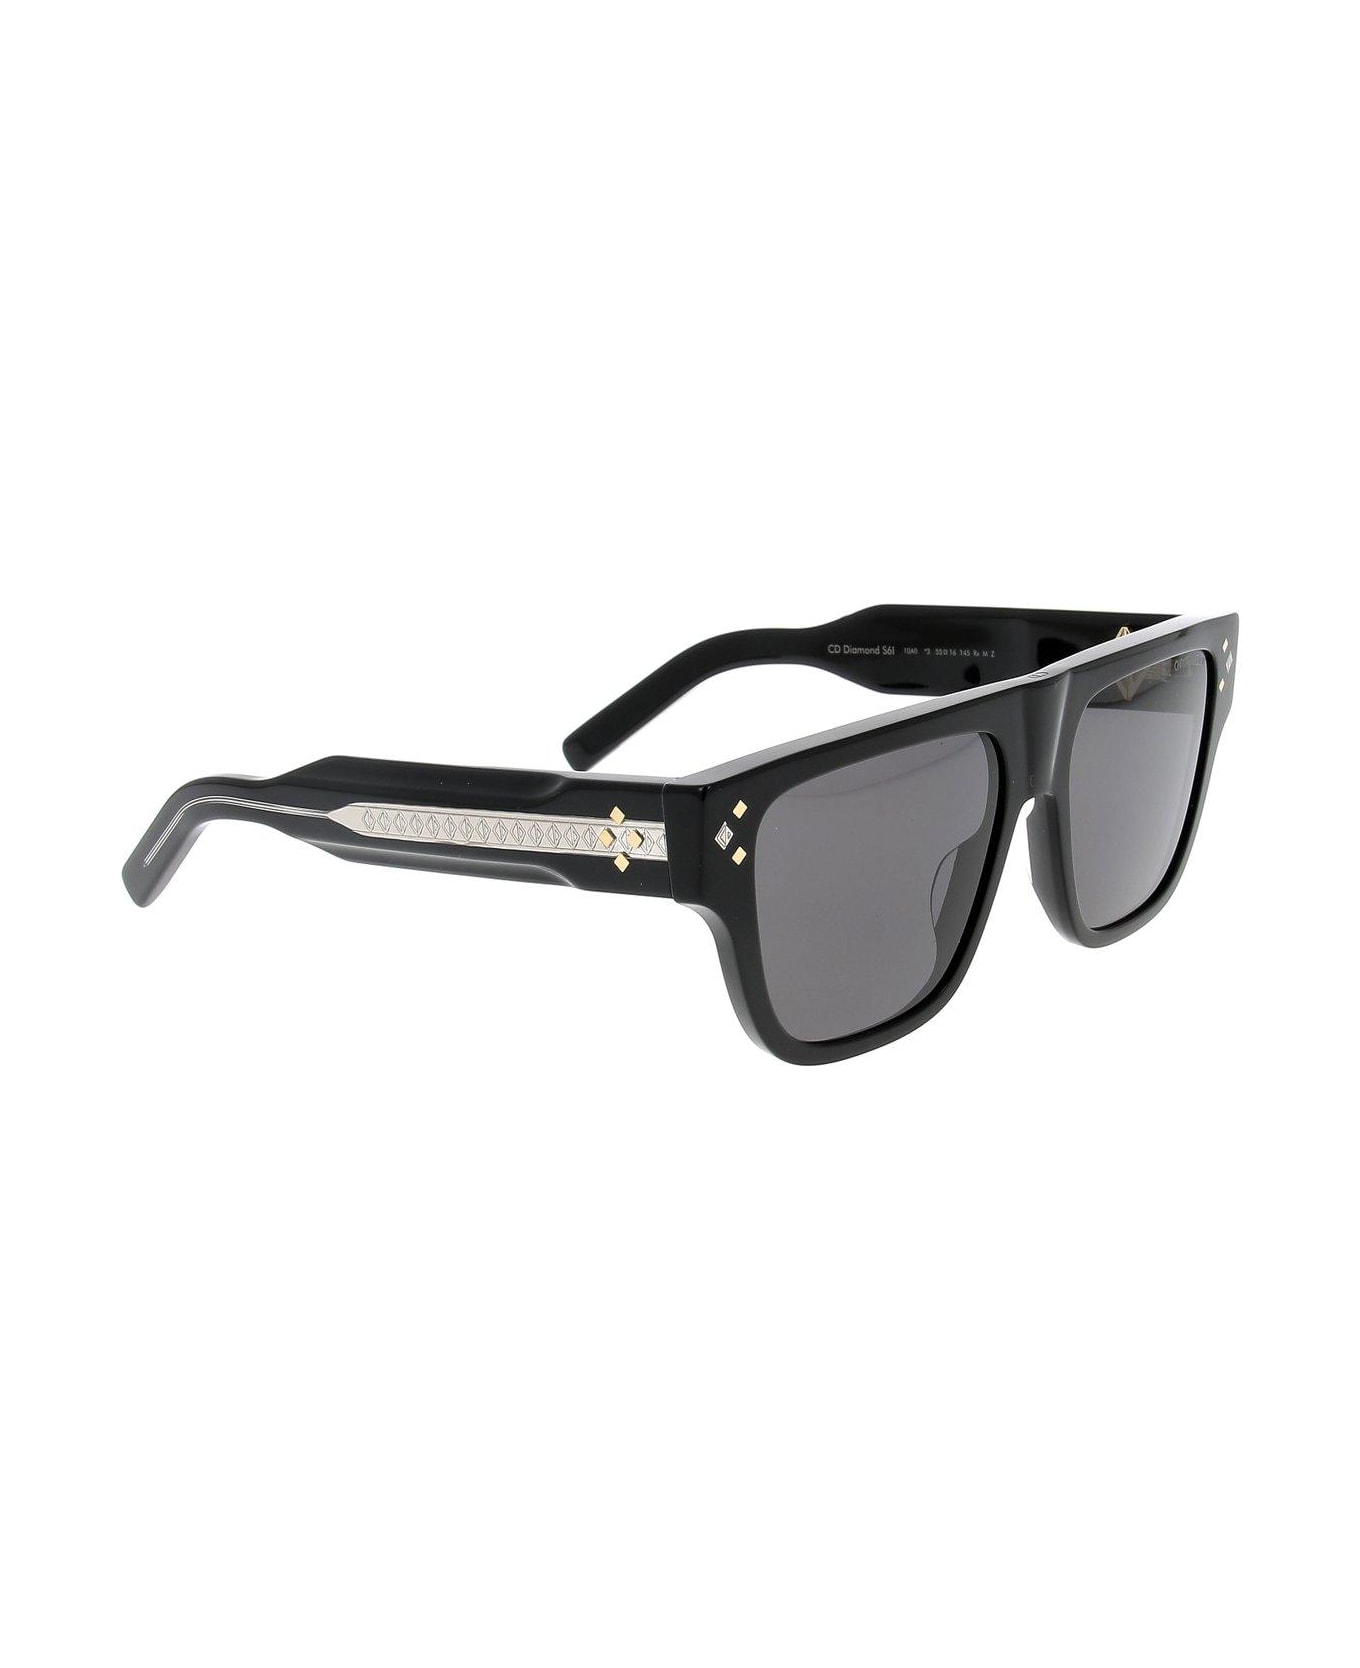 Dior Eyewear Square Frame Sunglasses - 10a0 サングラス